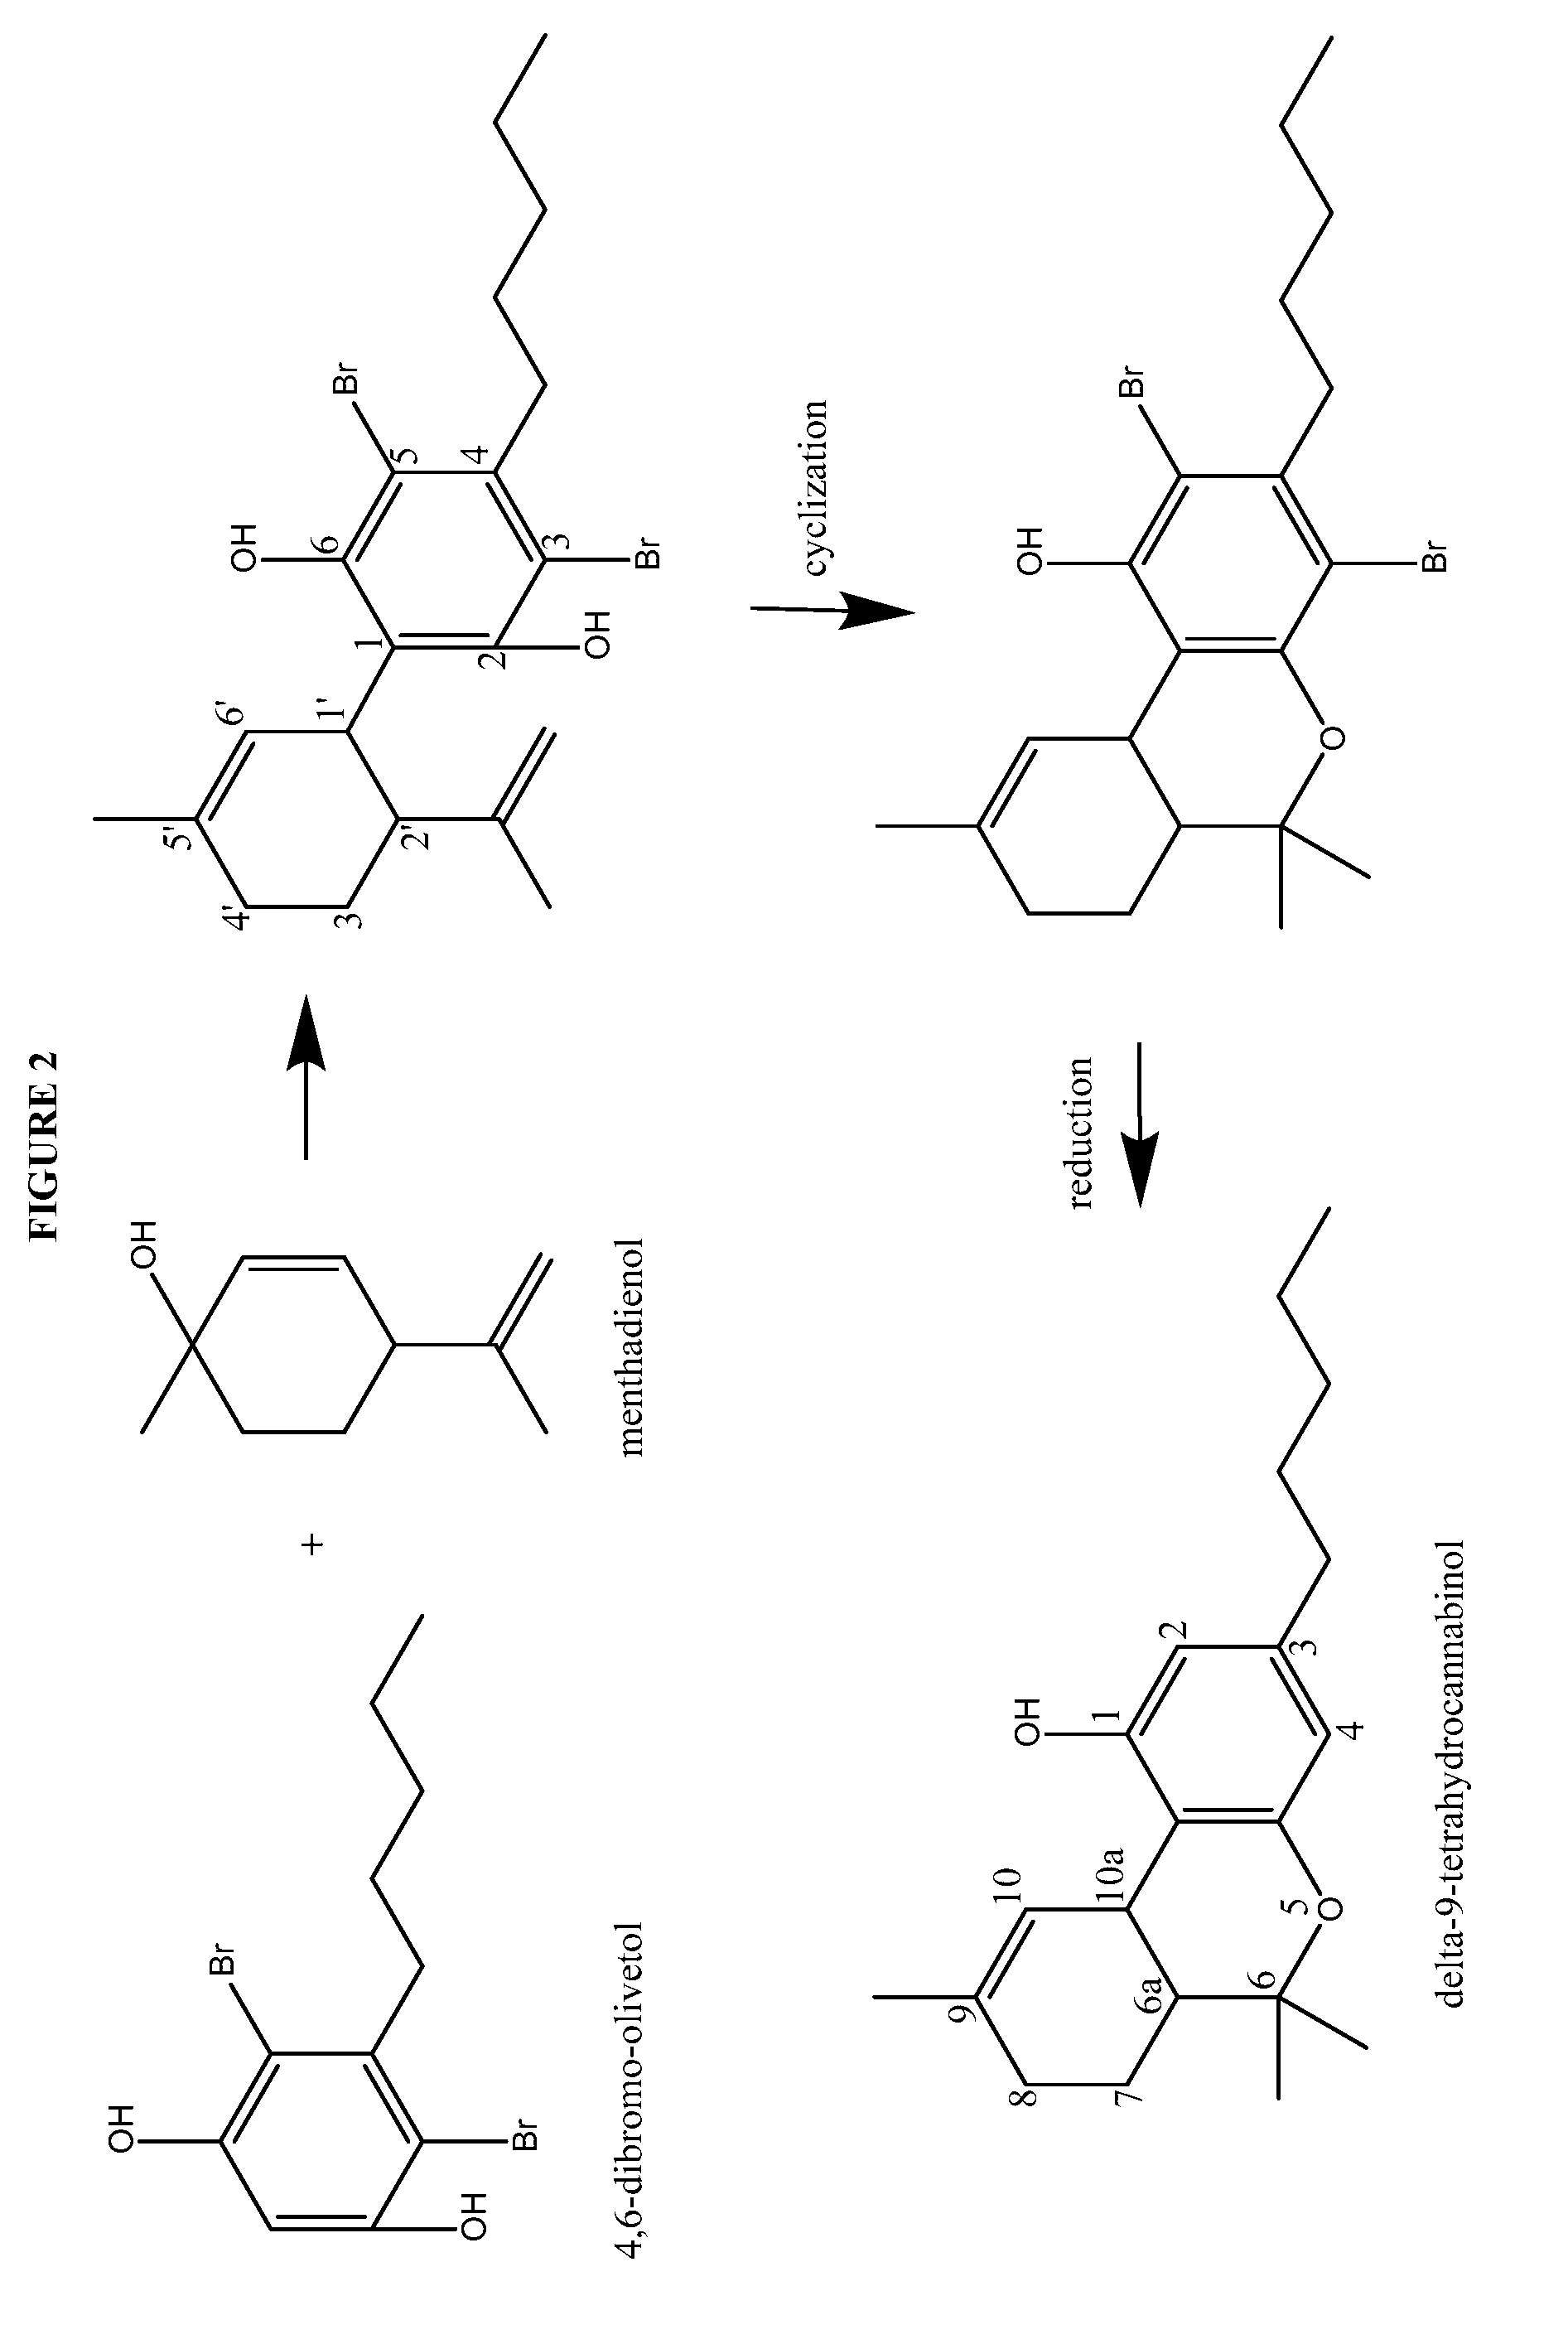 Process for the production of cannabidiol and delta-9-tetrahydrocannabinol